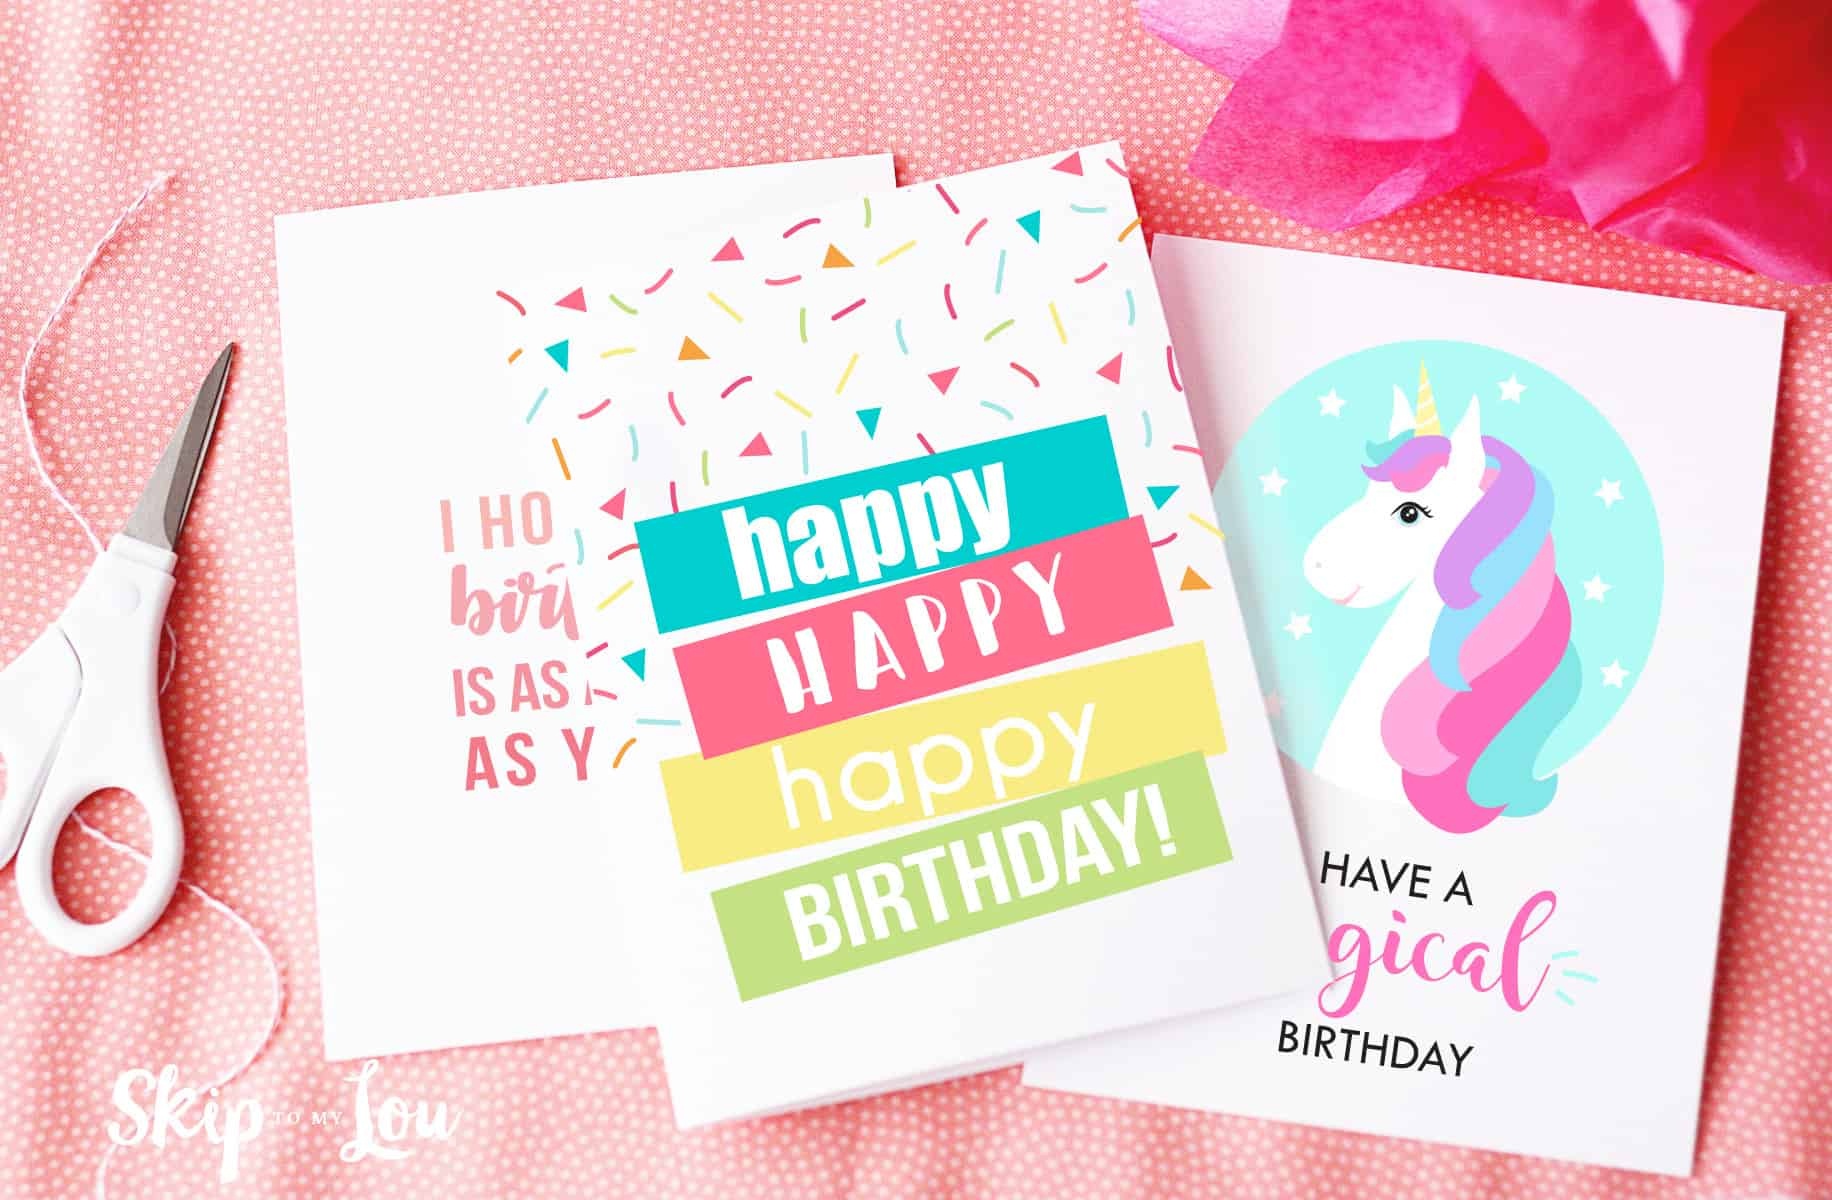 Free Printable Birthday Cards | Skip To My Lou - Free Printable Birthday Cards For Wife